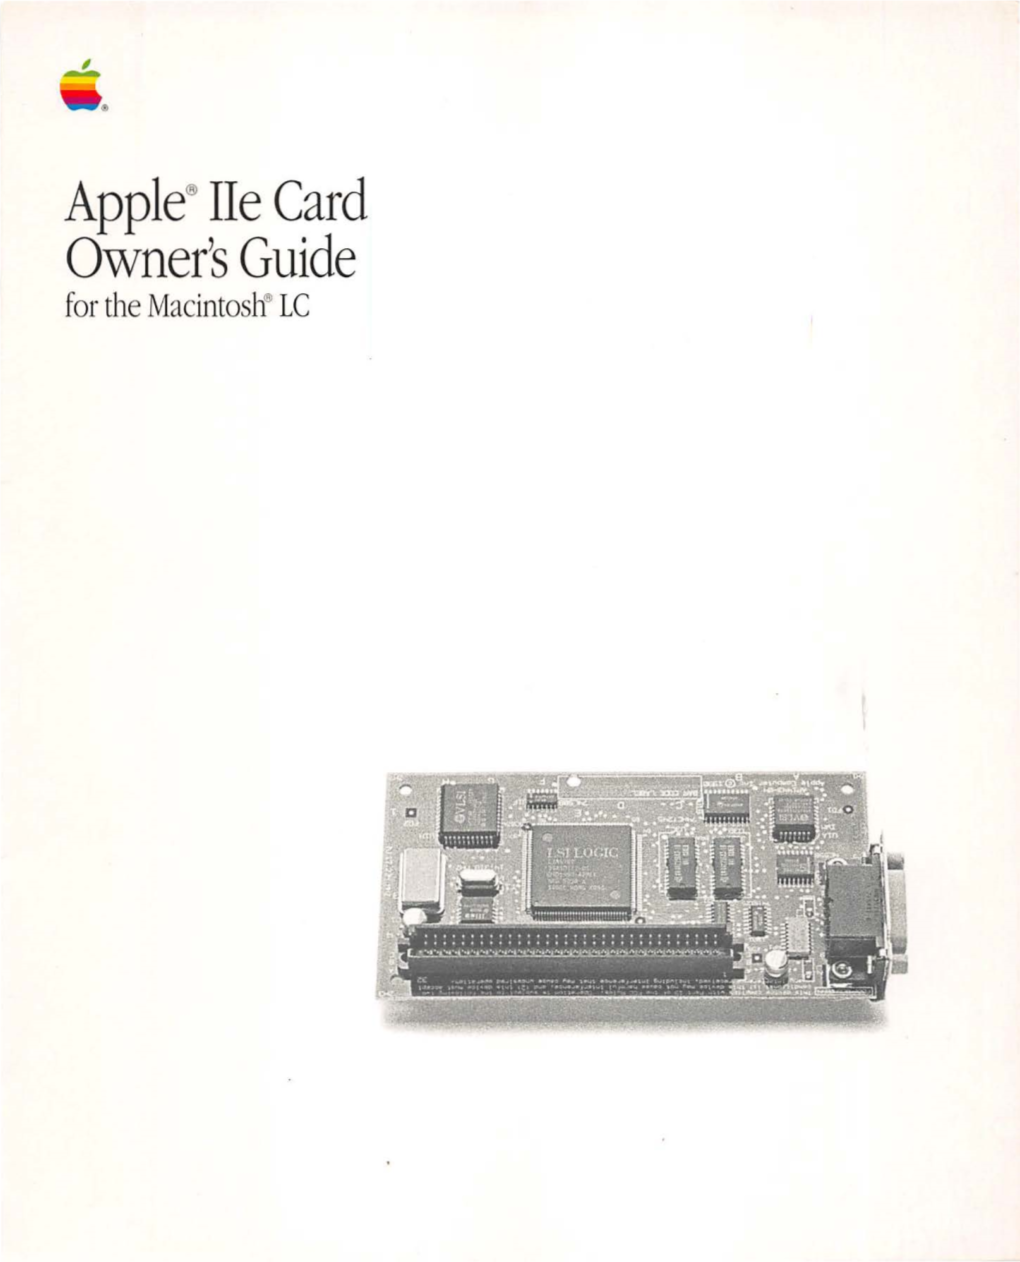 Apple Iie Card Owners Guide 1991.Pdf